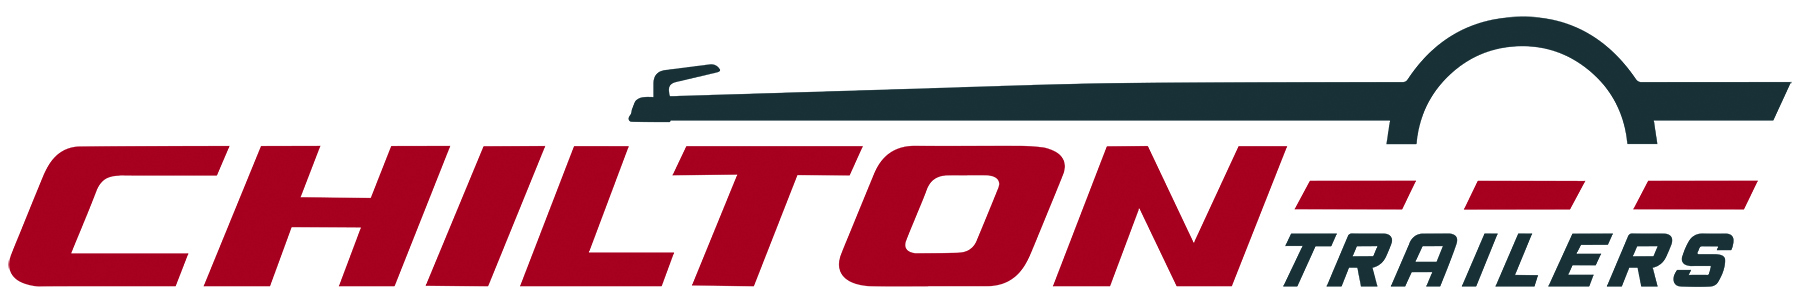 Chilton Trailors Logo Red Gray 6in PRINT (2)